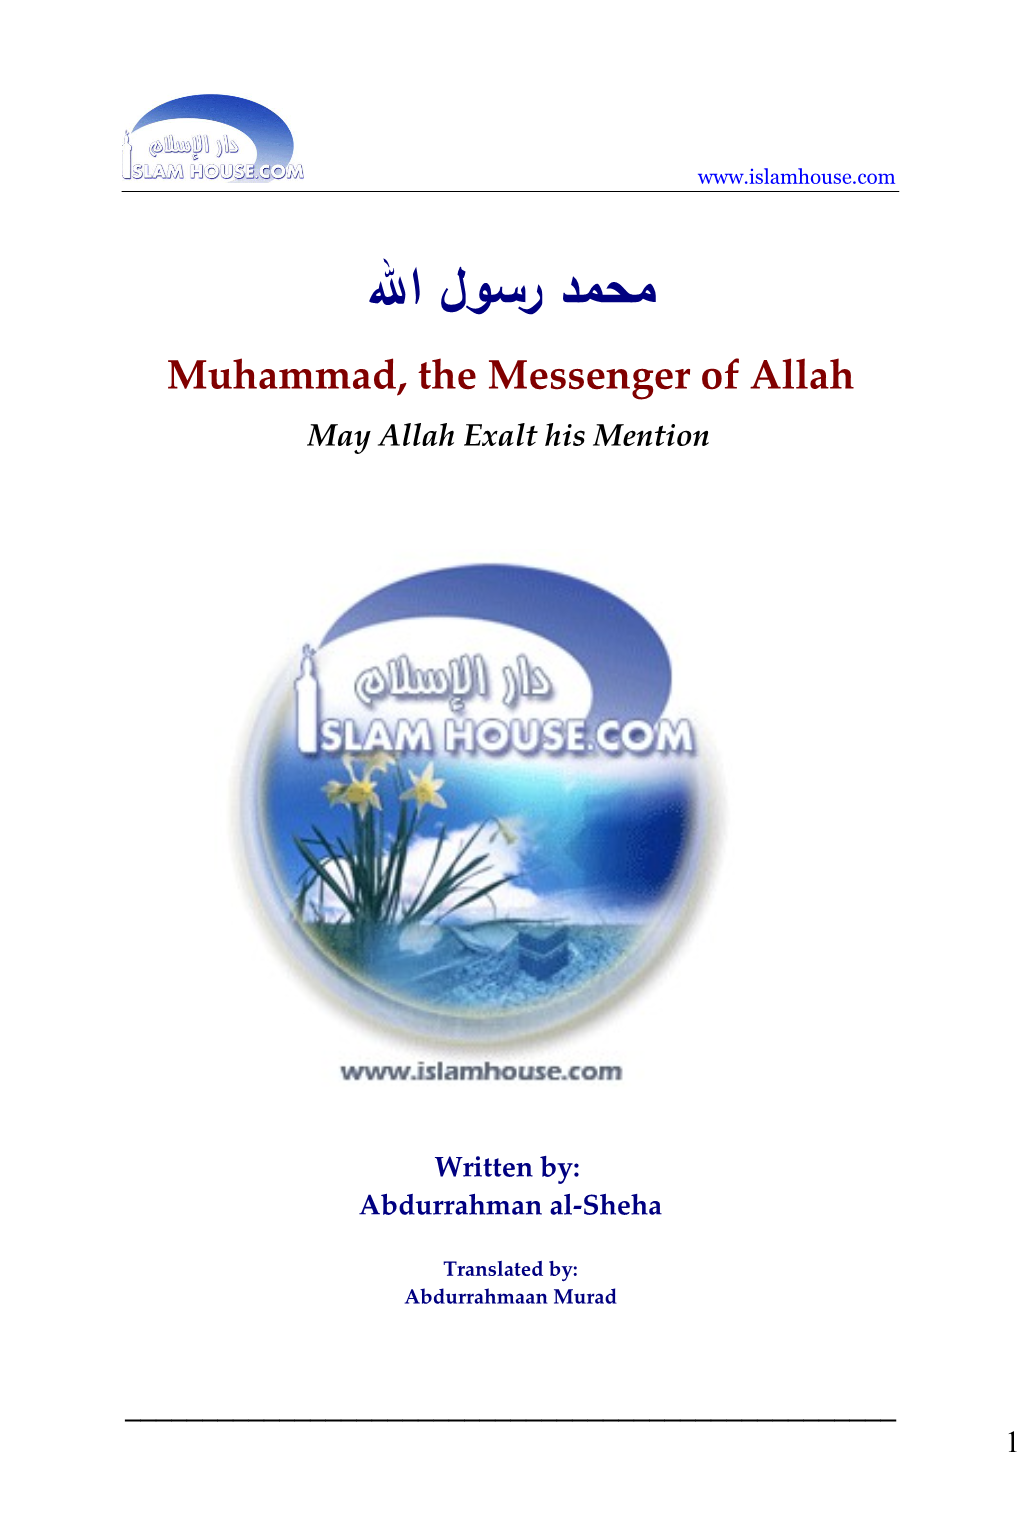 Muhammad, the Messenger of Islam